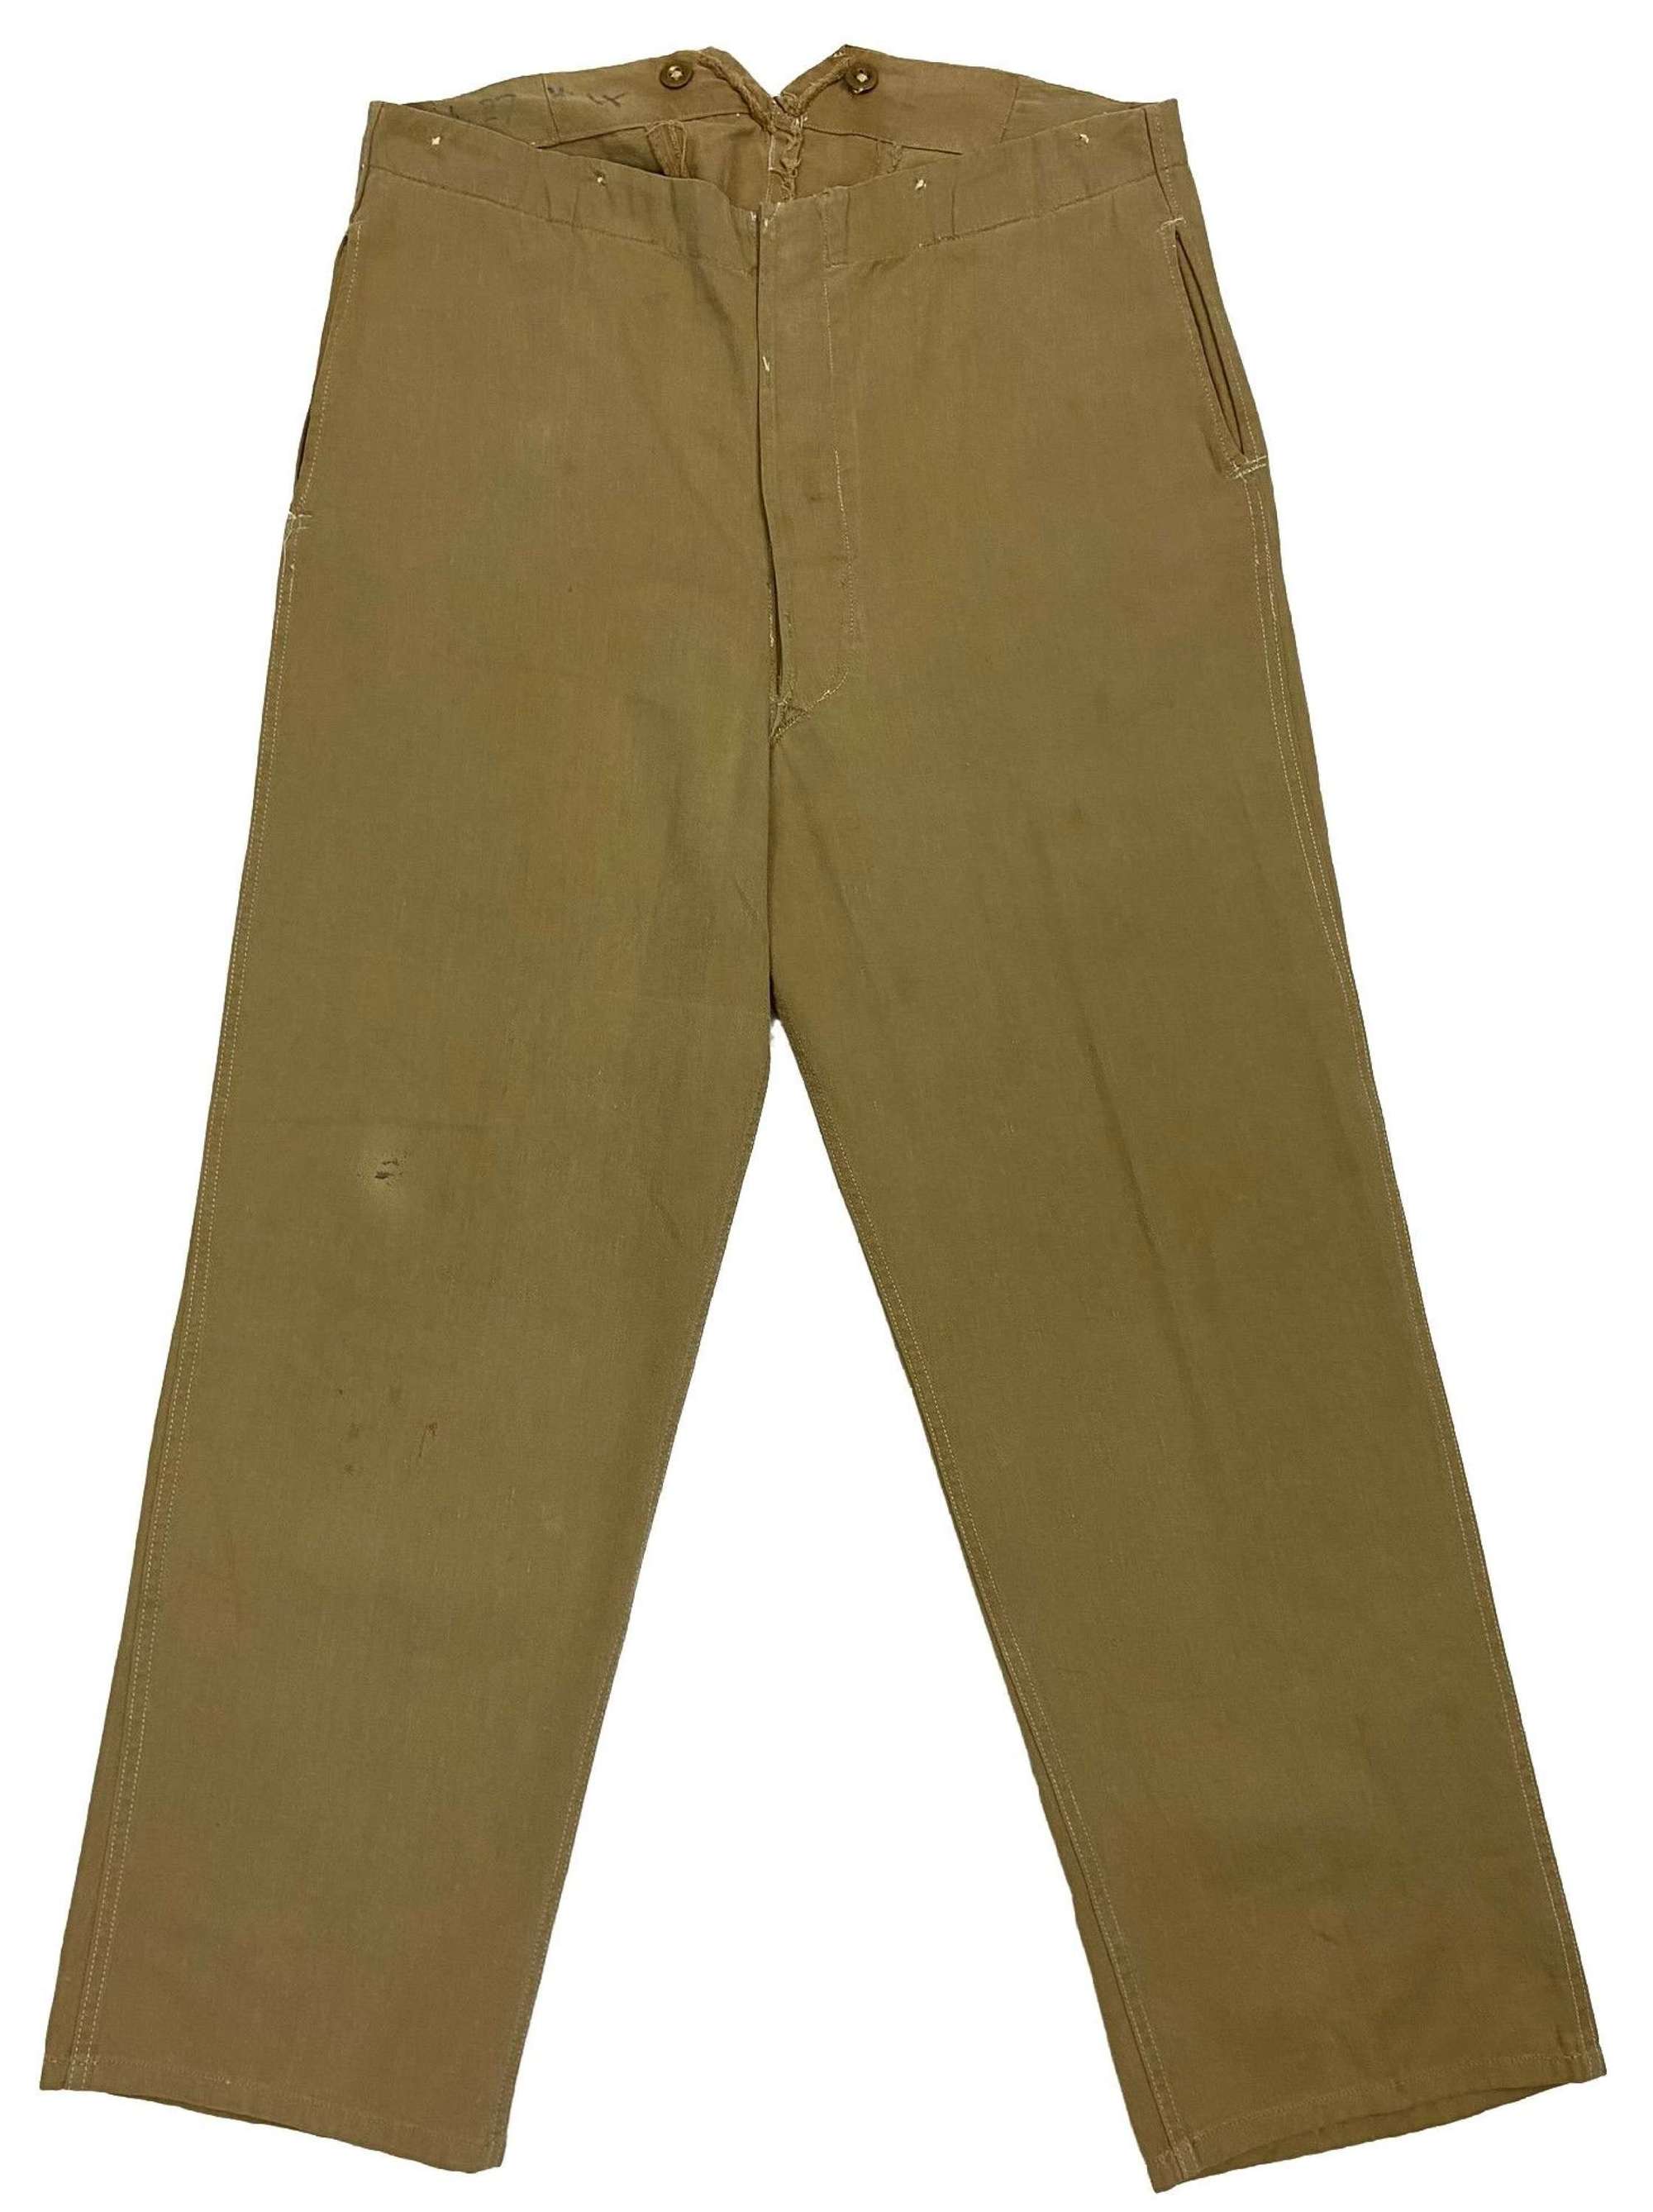 Original 1943 Dated RAF Khaki Drill Trousers